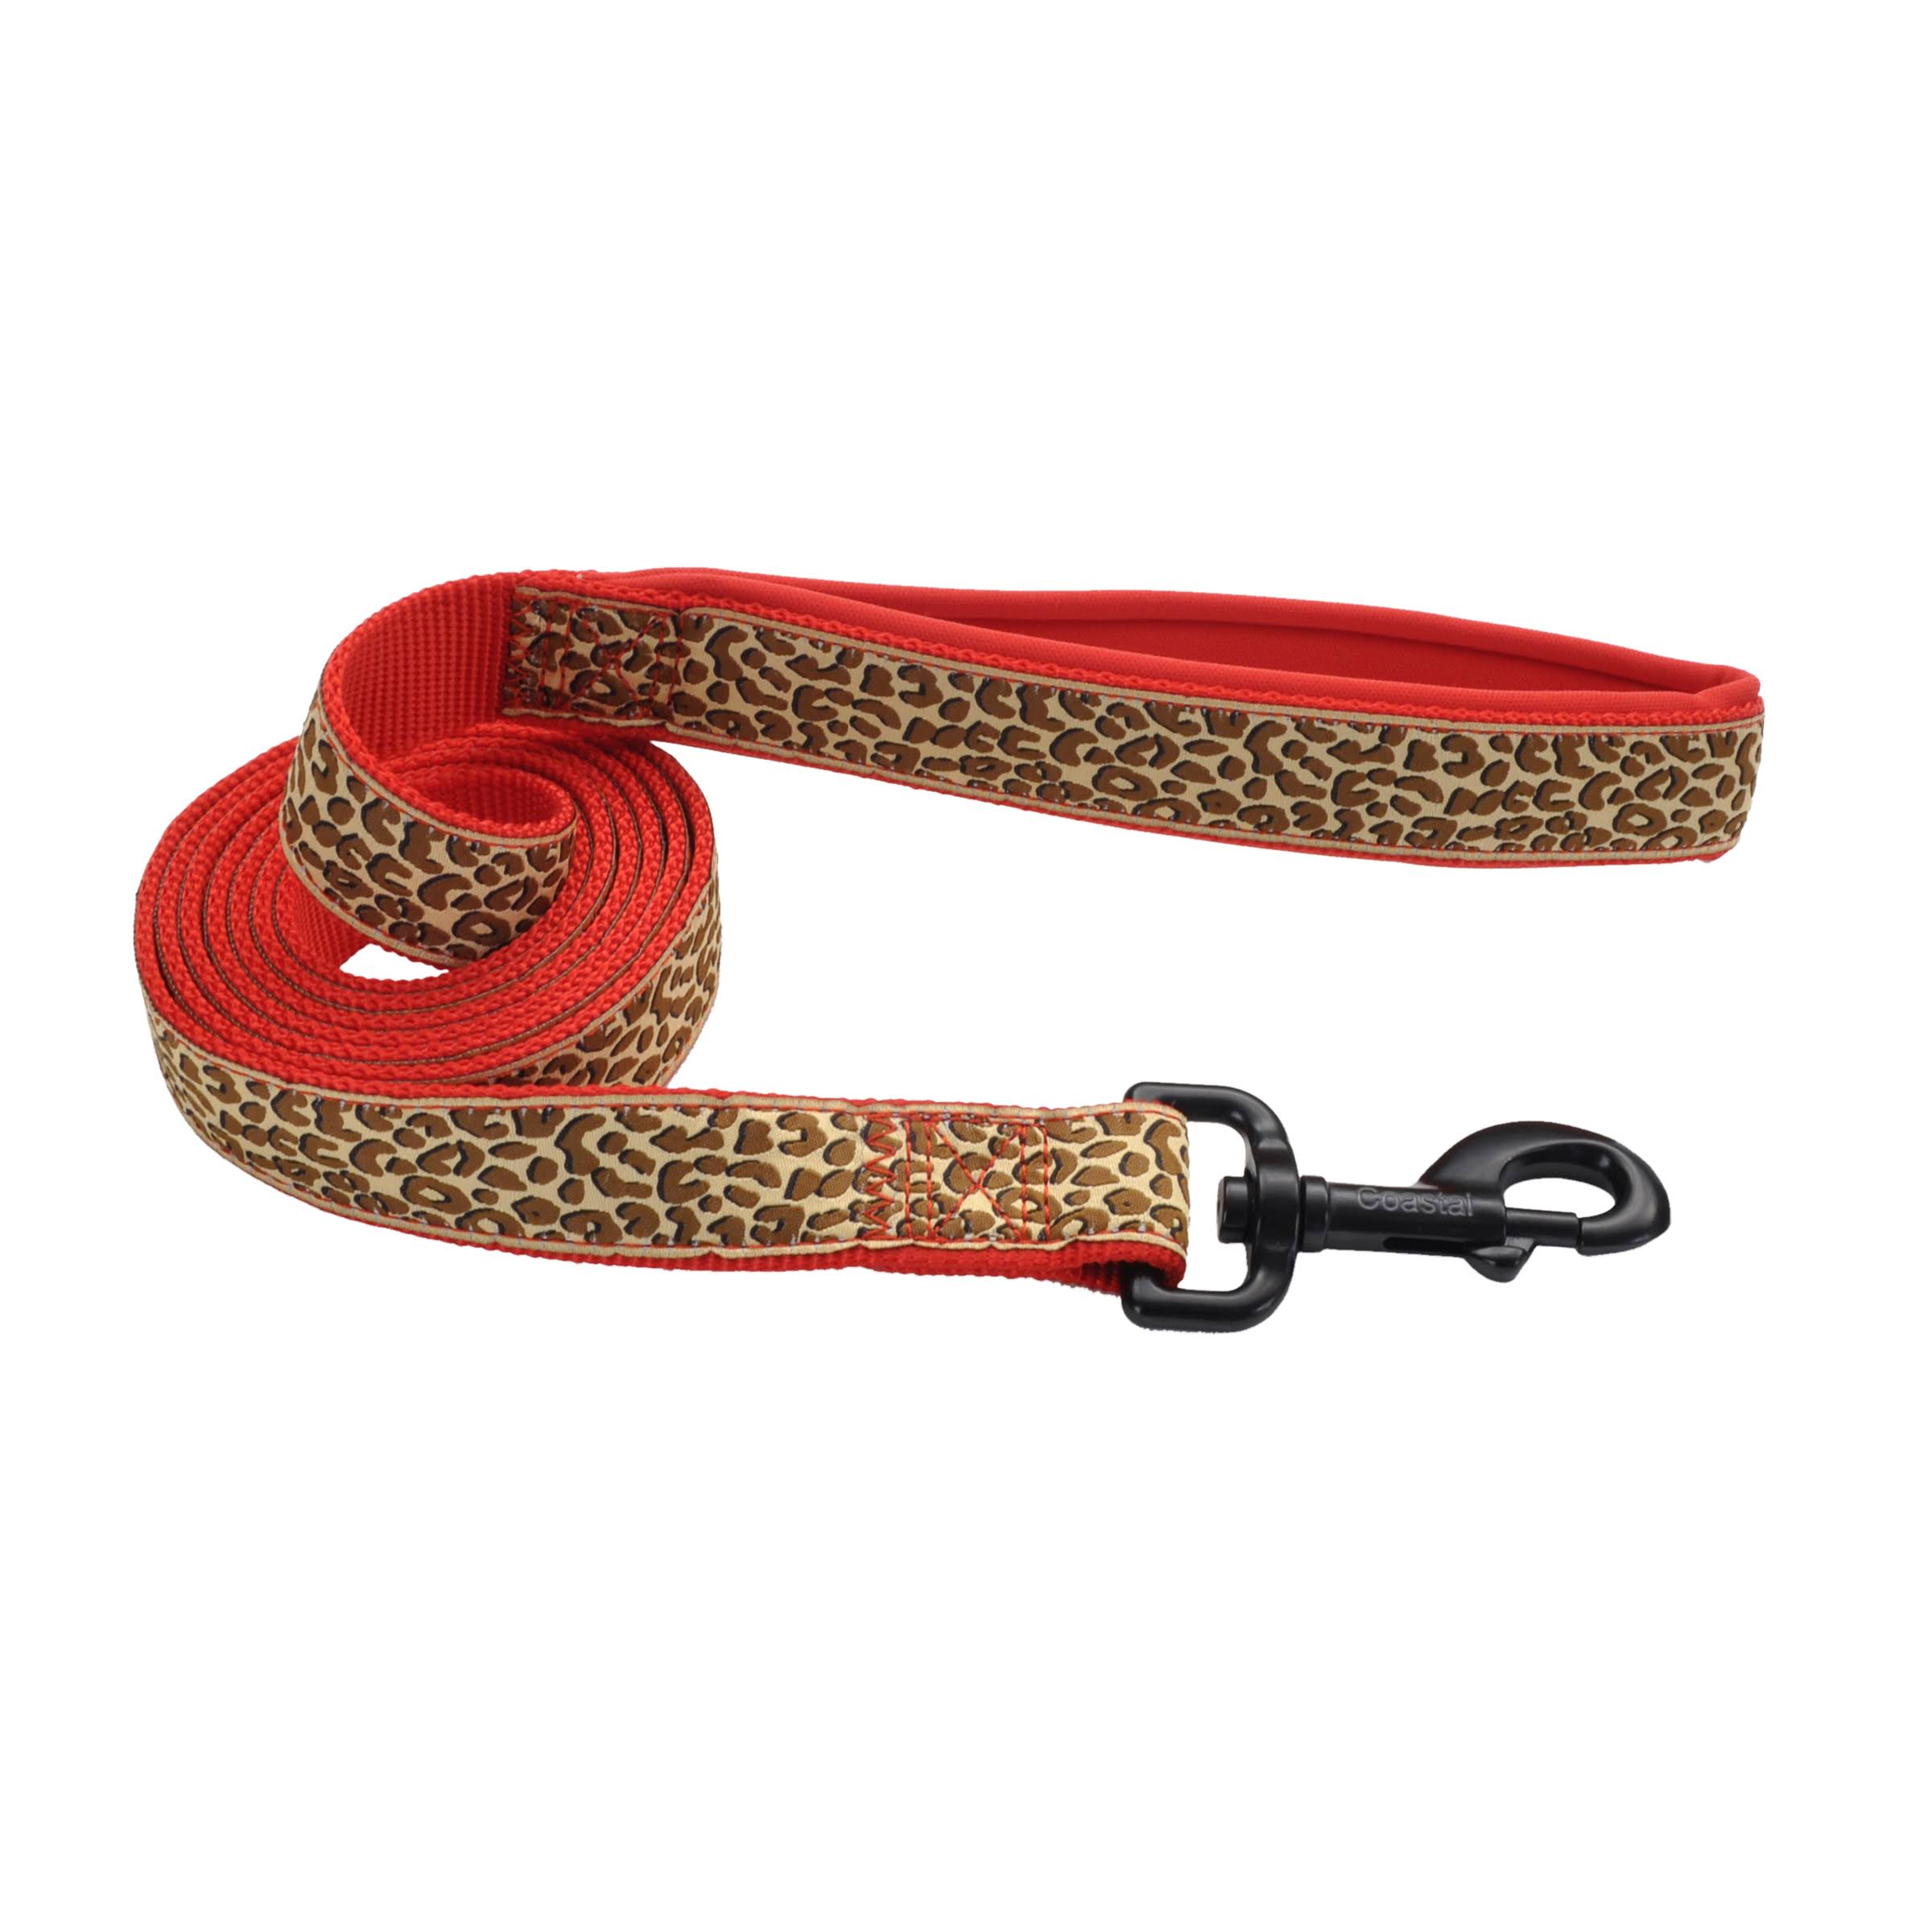 Coastal Pet Products Ribbon Weave Neoprene Leash Leopard - Red, 1"x6'